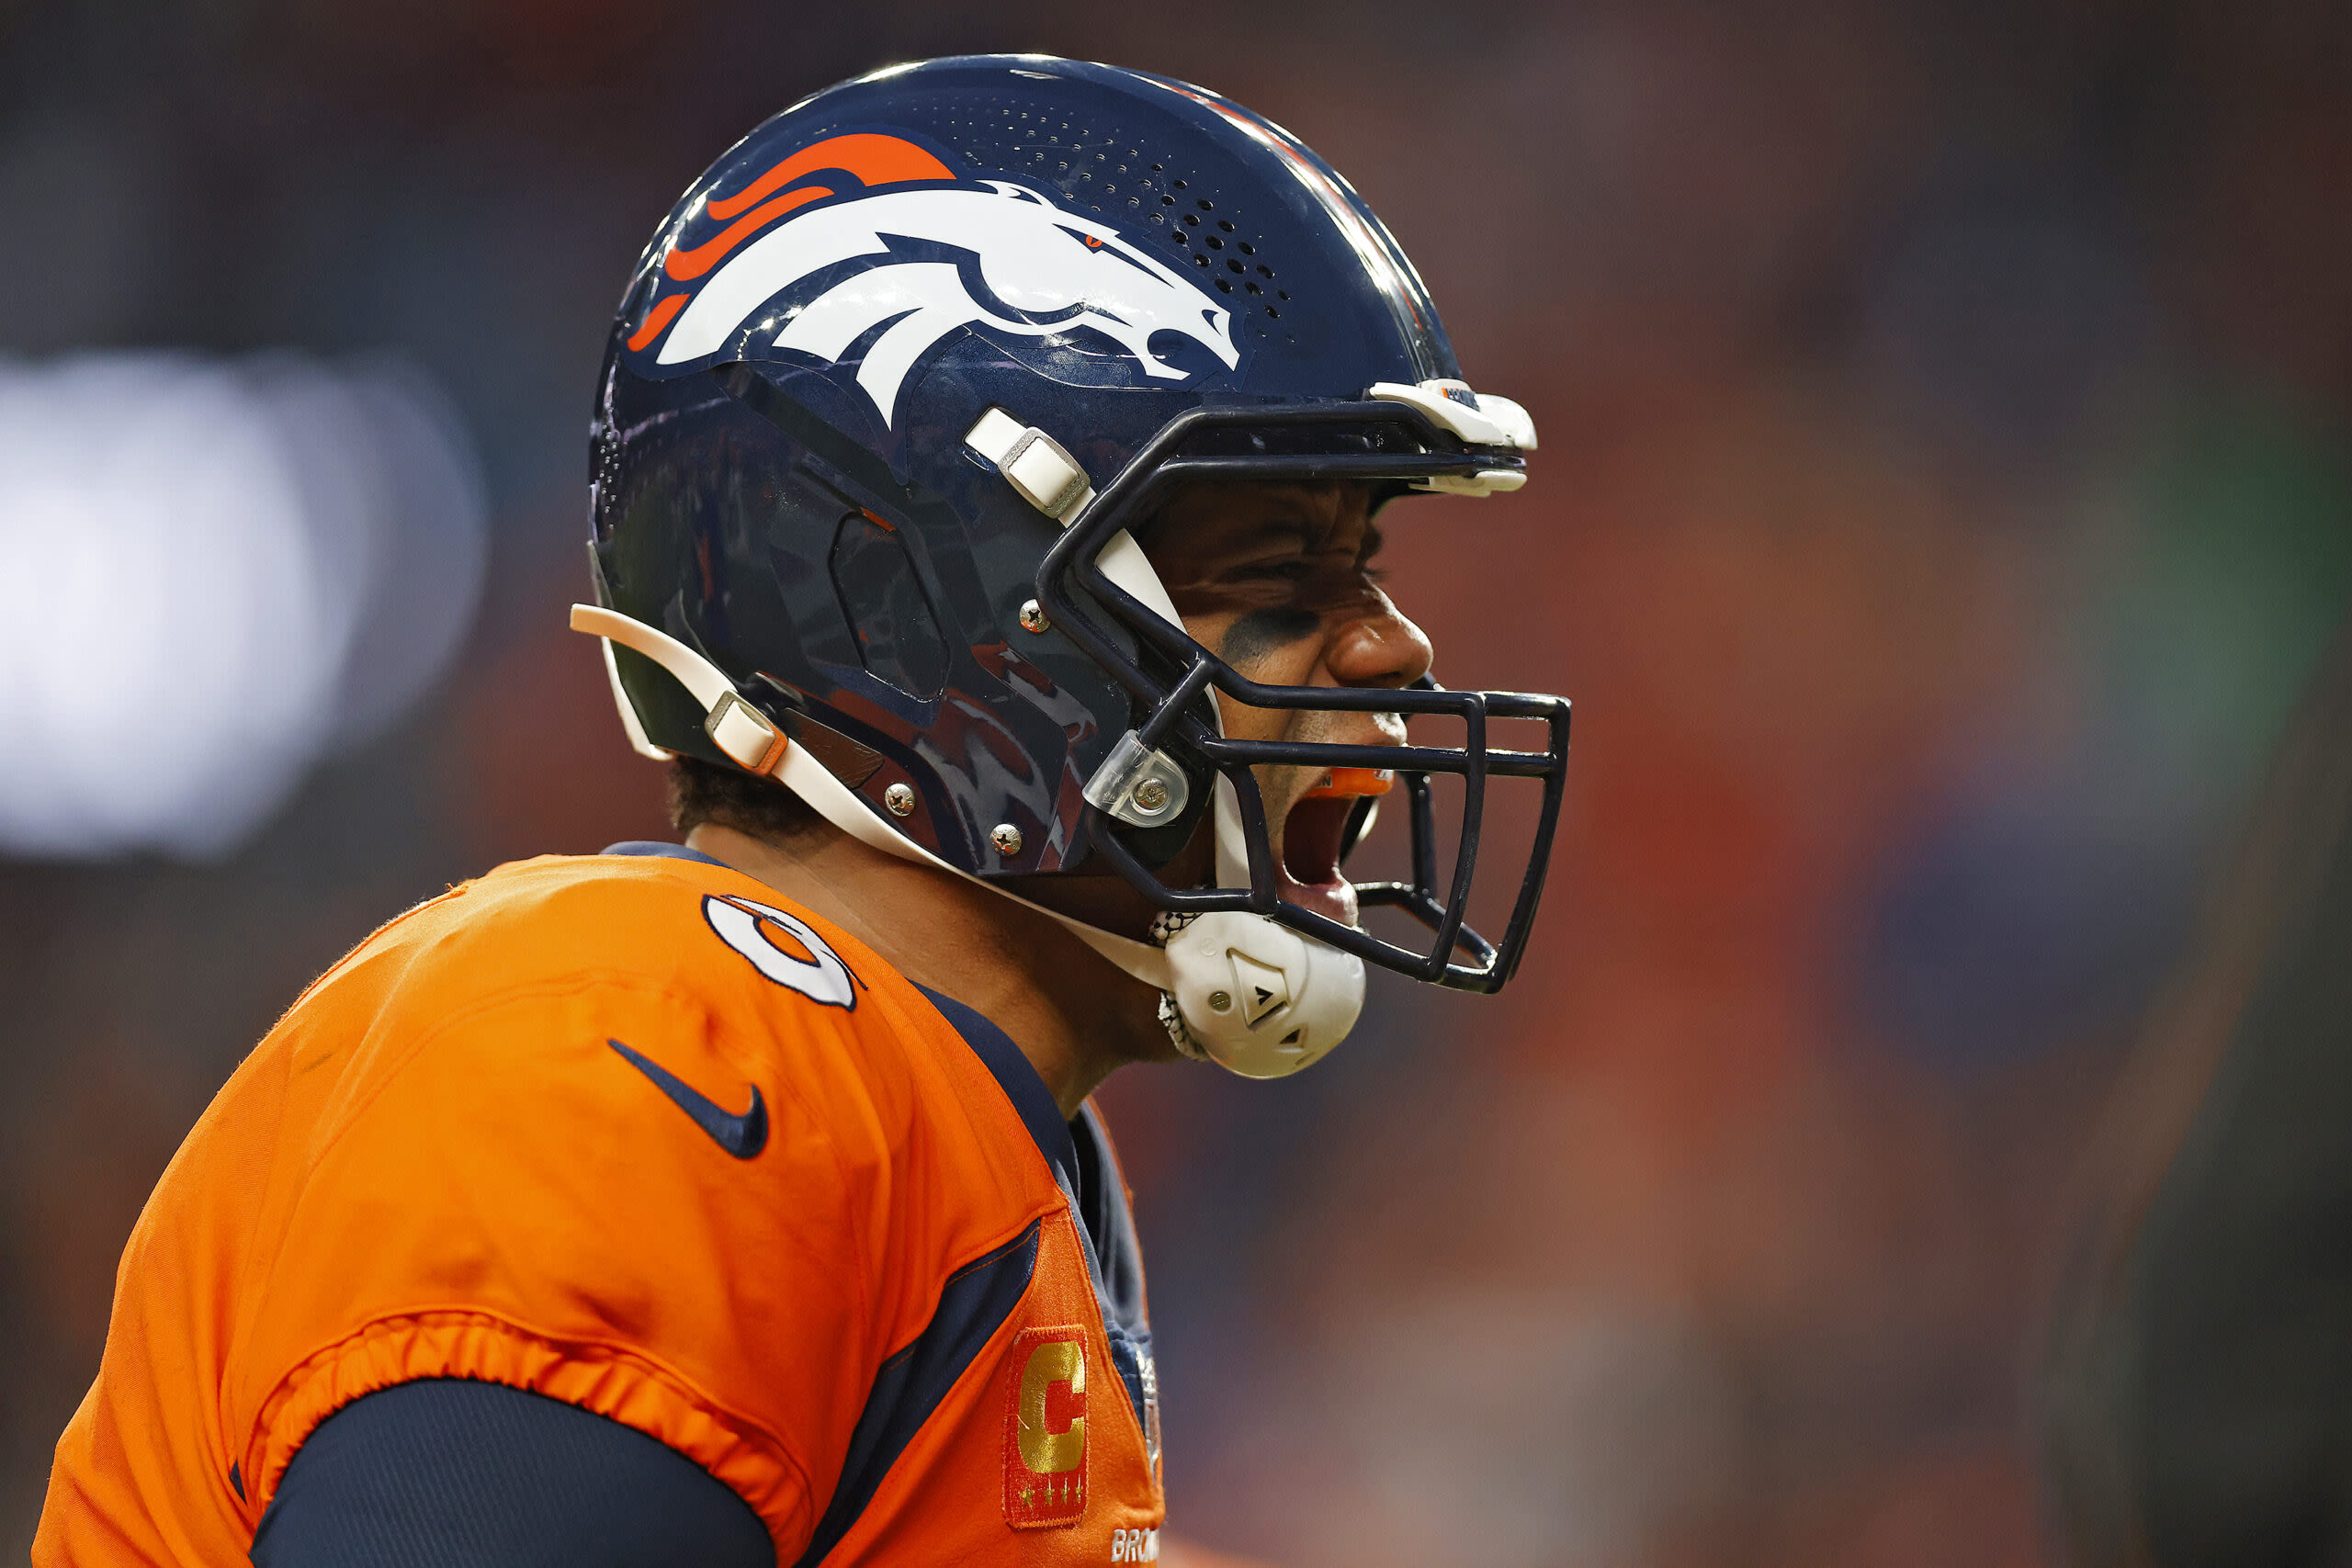 Former Wisconsin quarterback joined NFL legend Peyton Manning with impressive career milestone